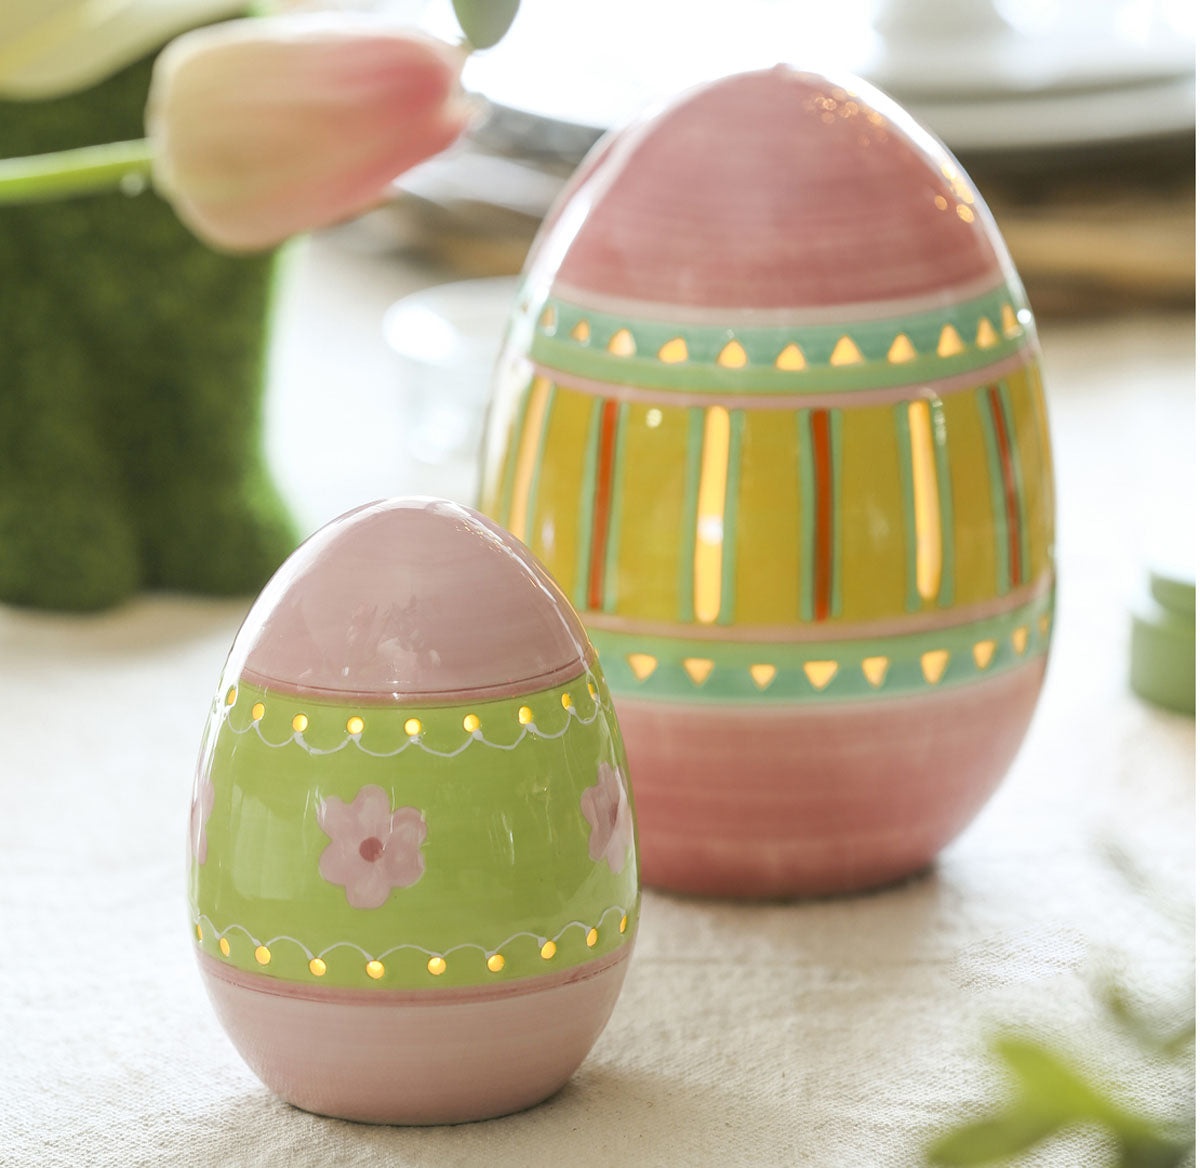 Easter Eggs (LED, set of 2)